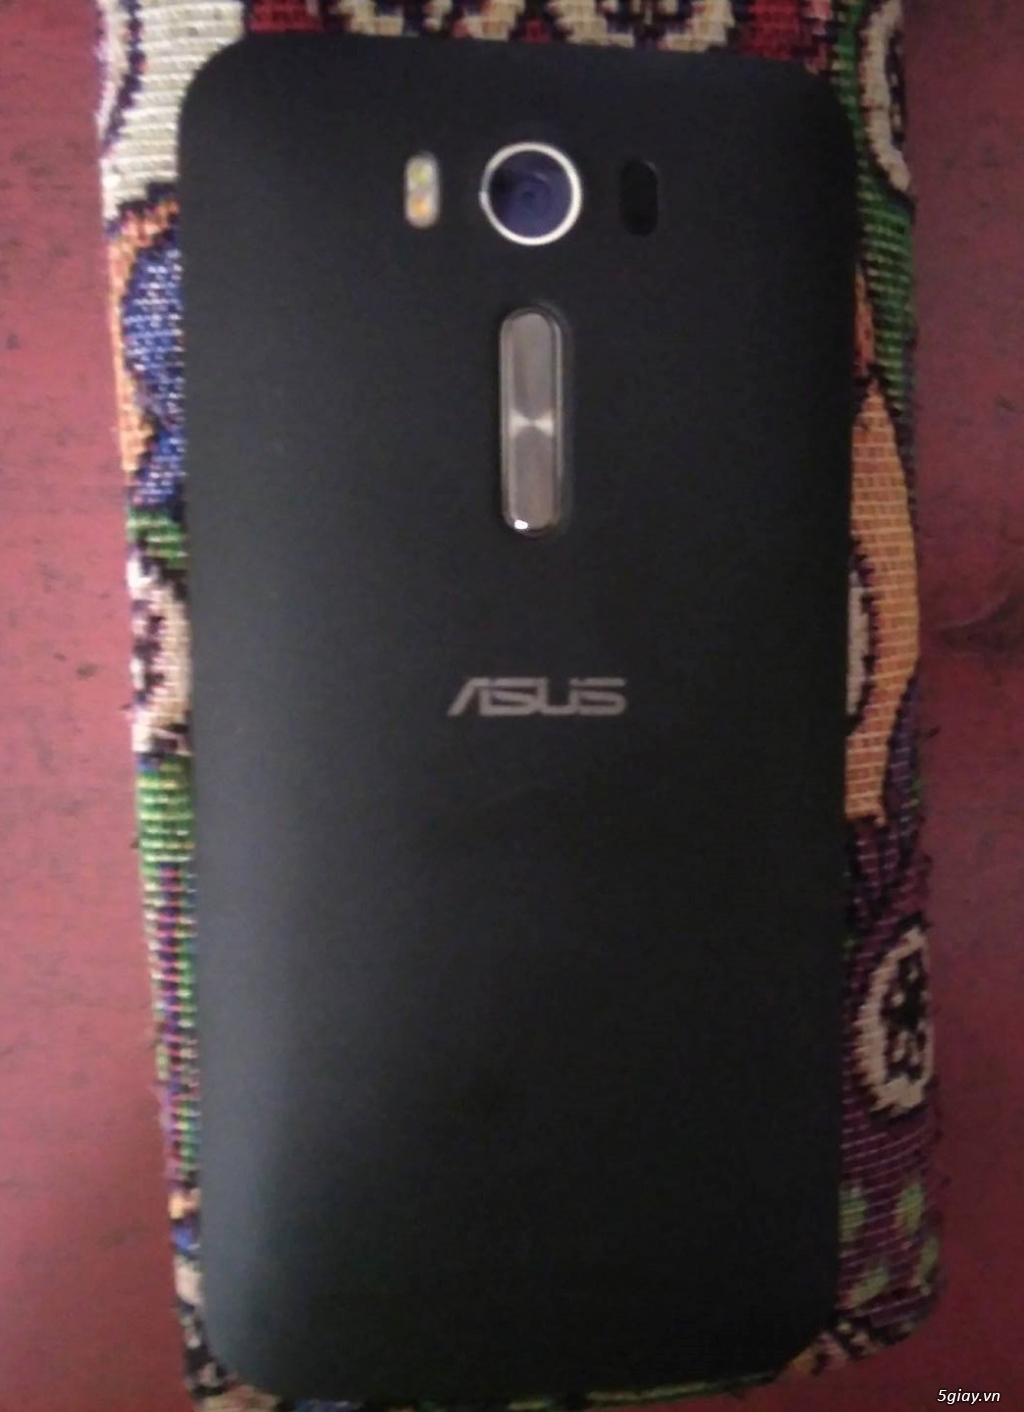 Cần bán: Điện thoại Asus Zenfone 2 Laser 16 Gb - 1